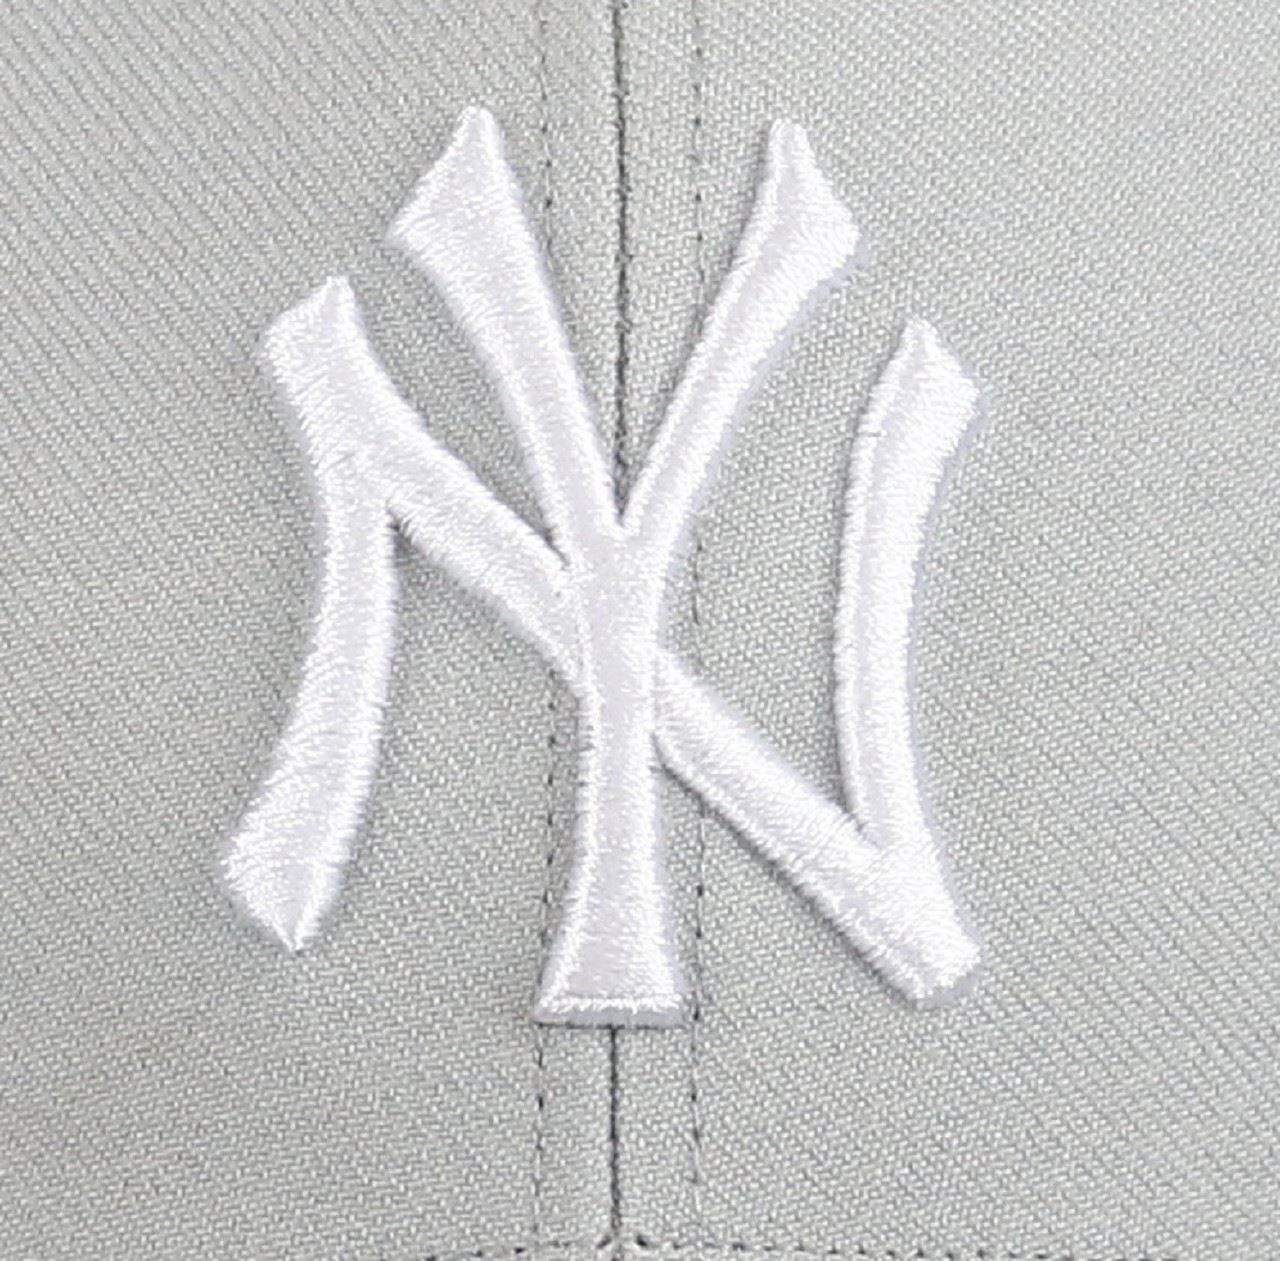 New York Yankees Grey MLB Most Value P. Cap '47 